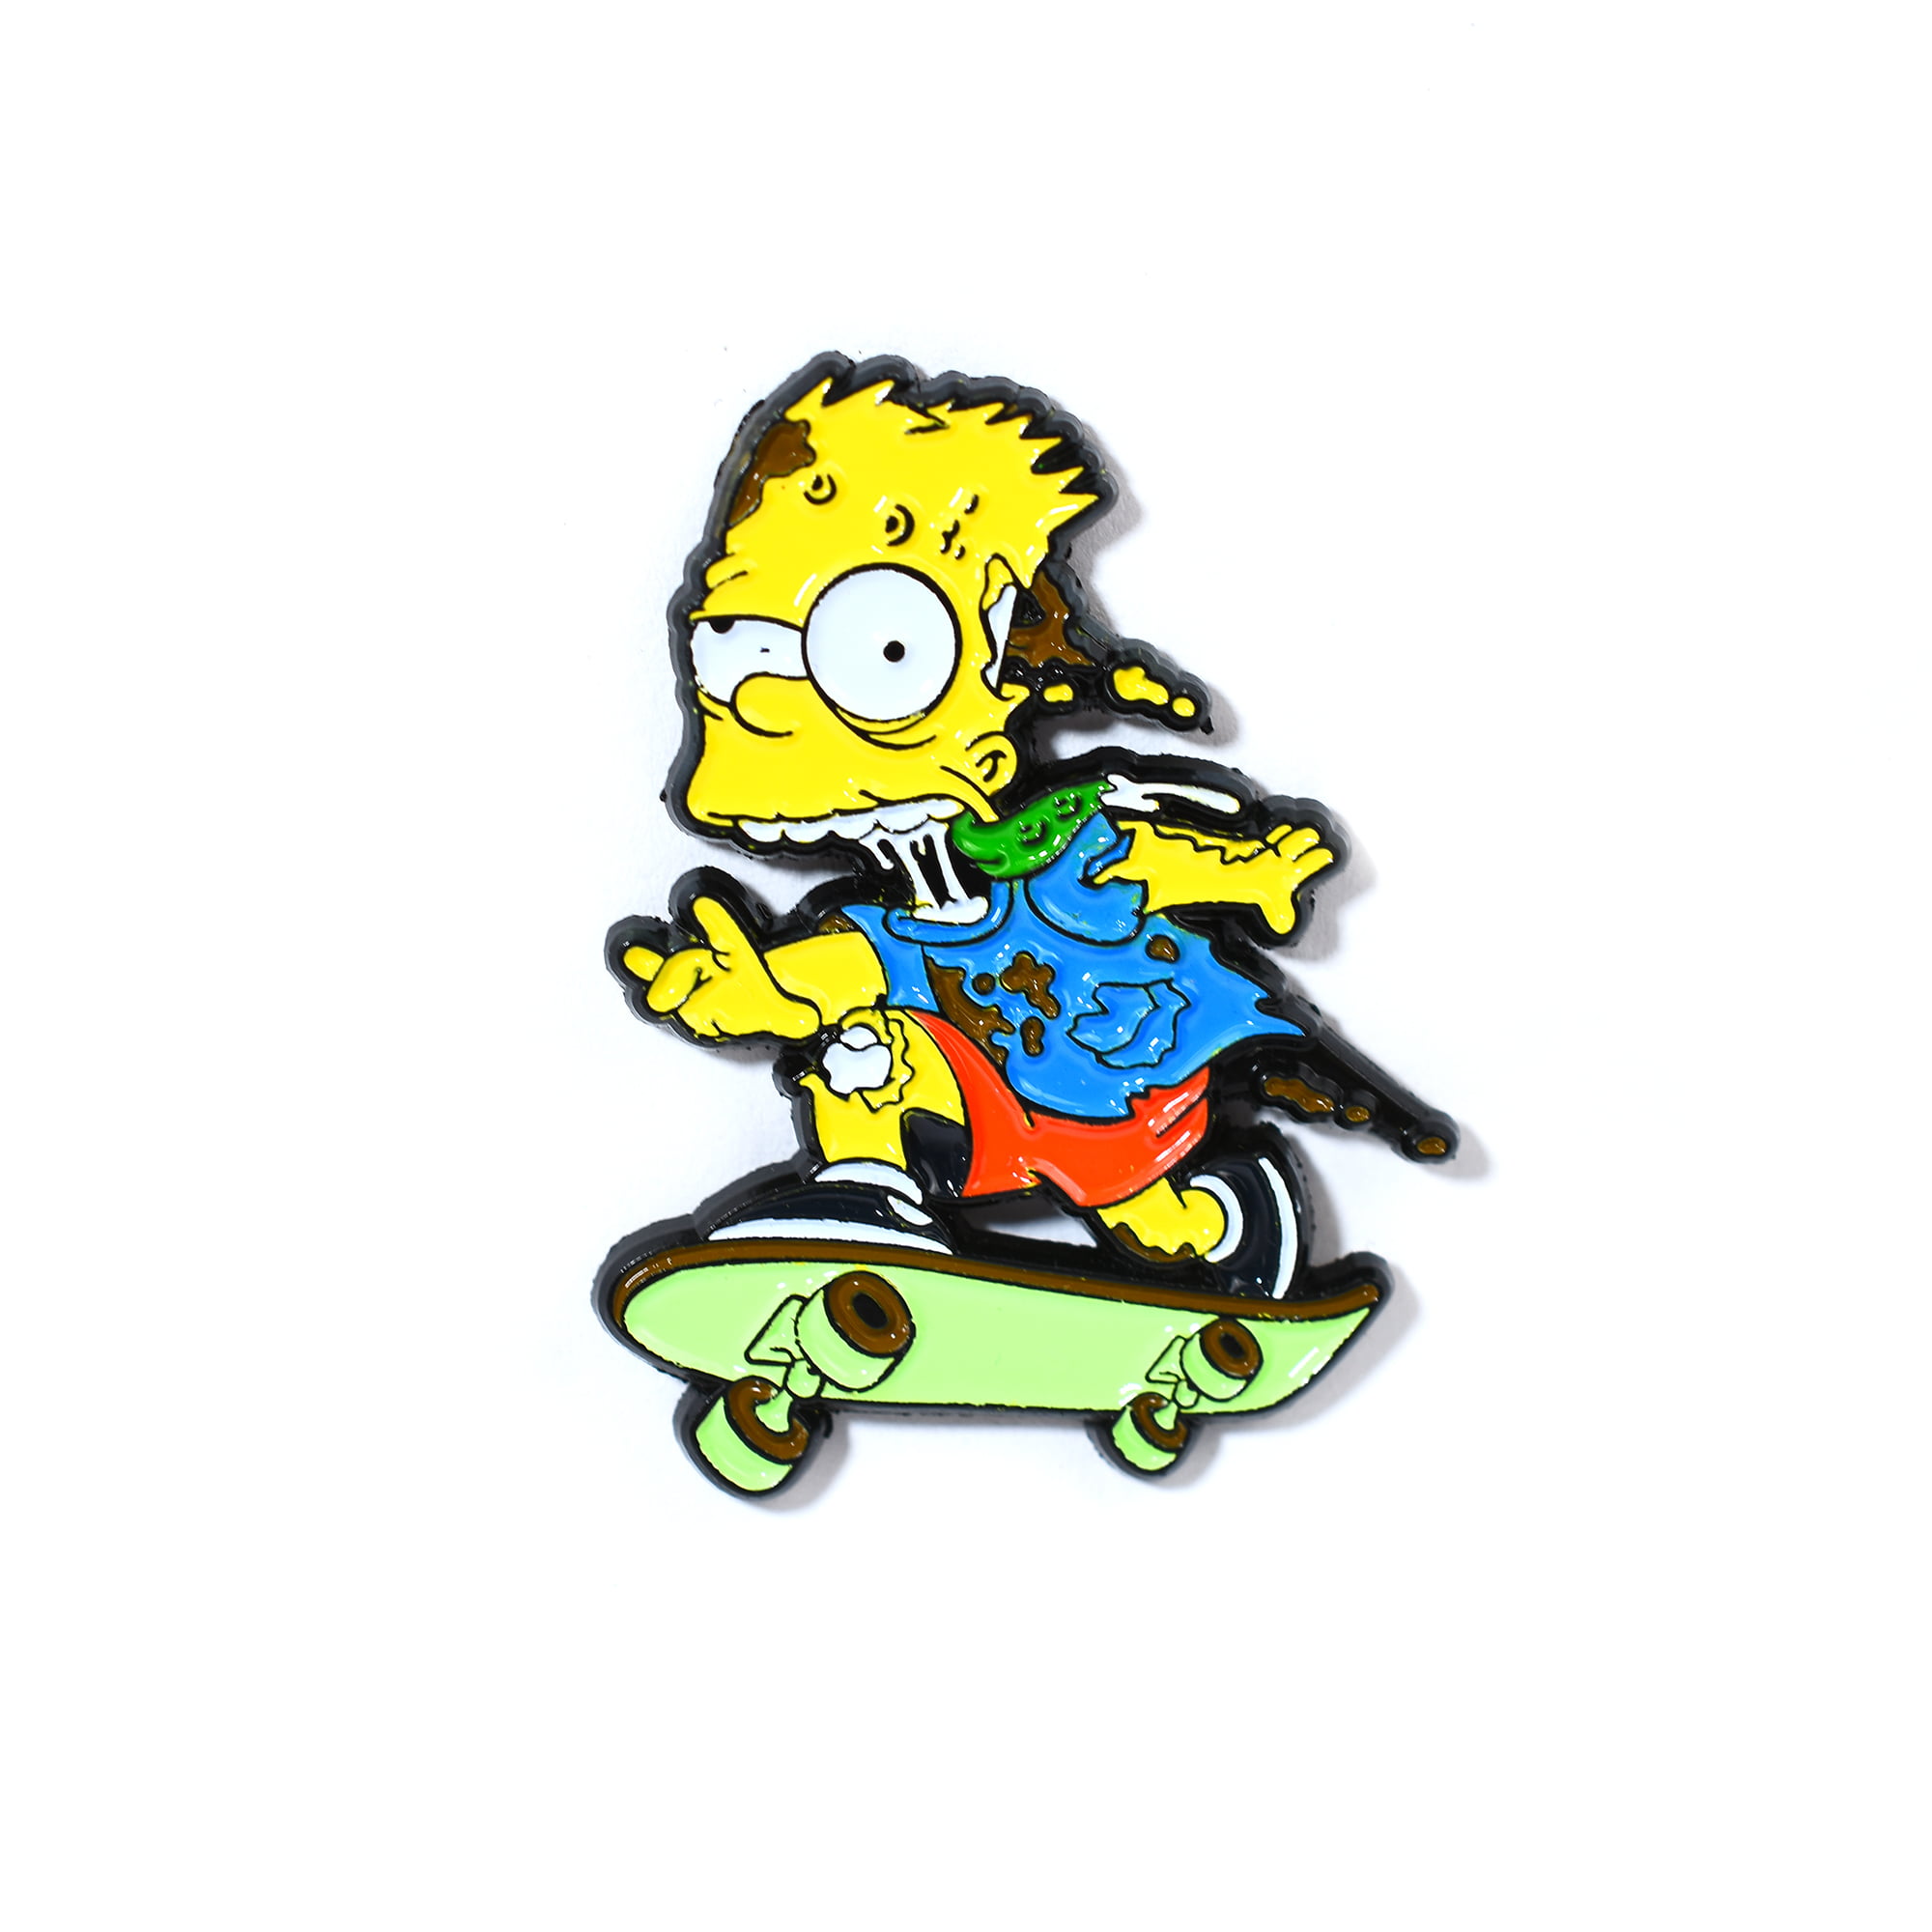 The Simpsons Zombie Bart Skateboard Deck hot sale online.